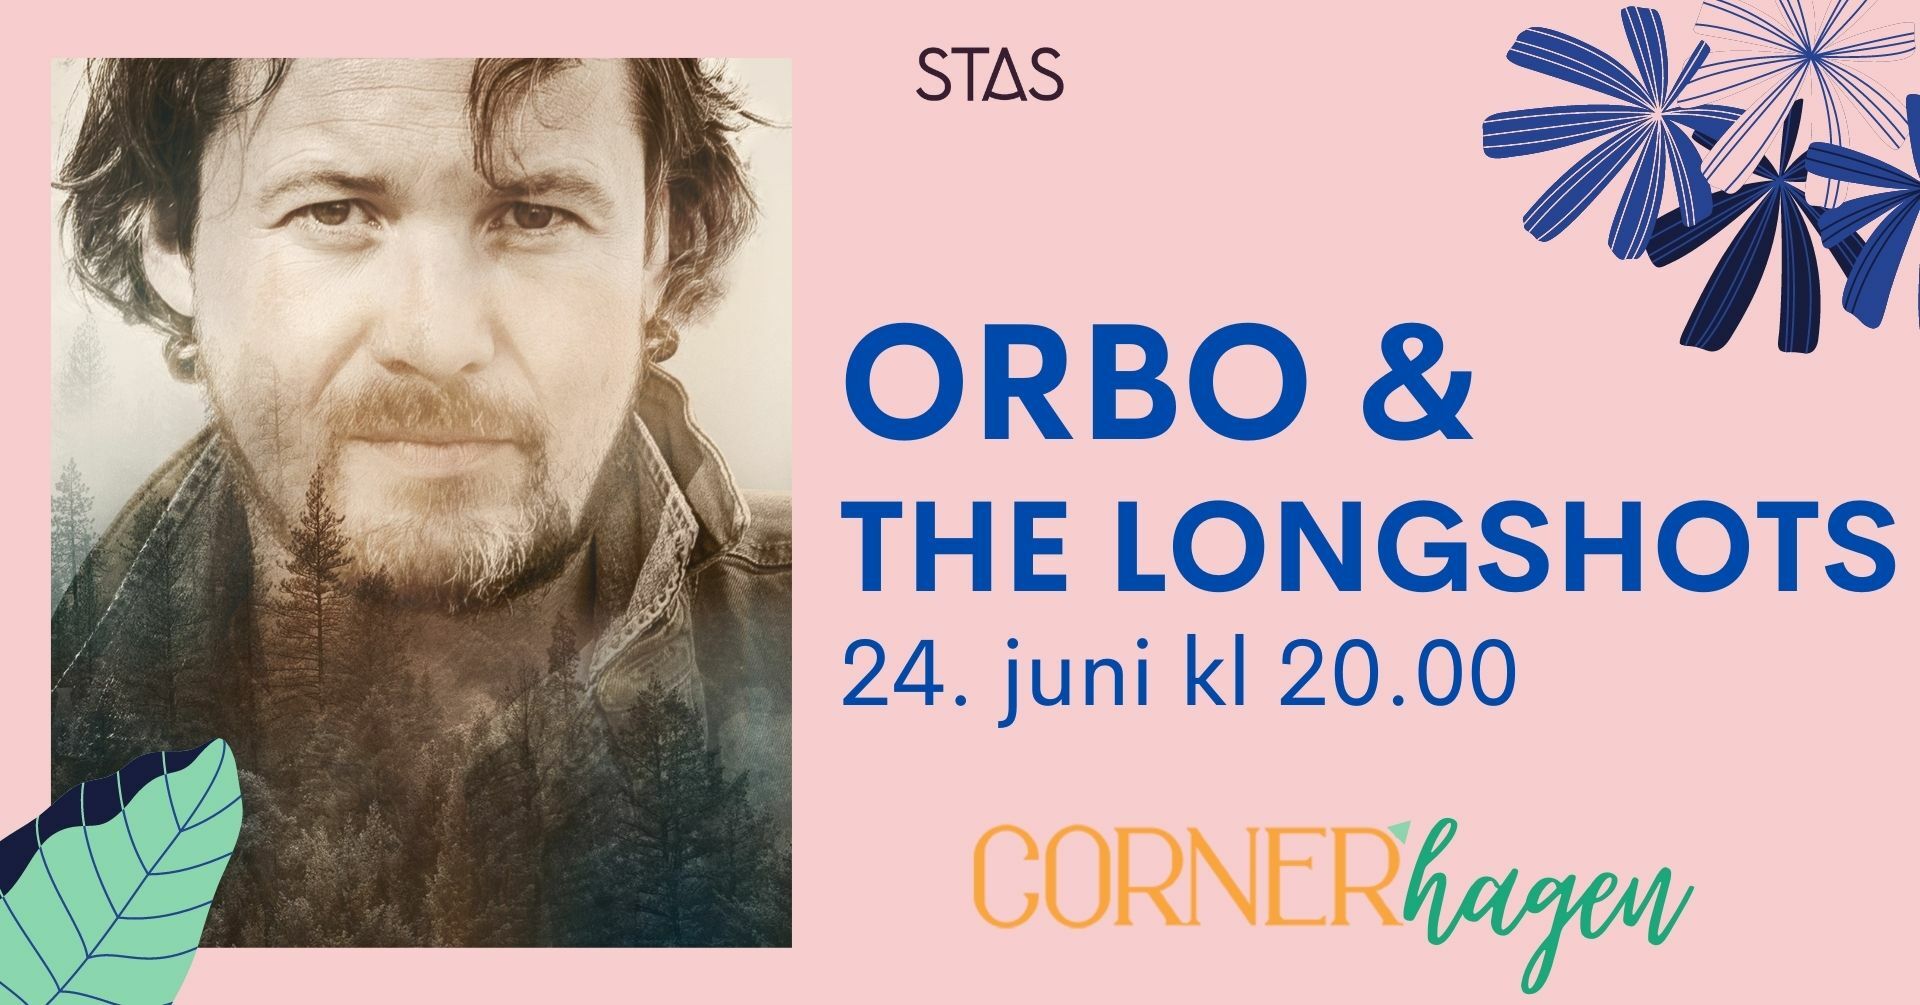 ORBO & The Longshots  - Stas 